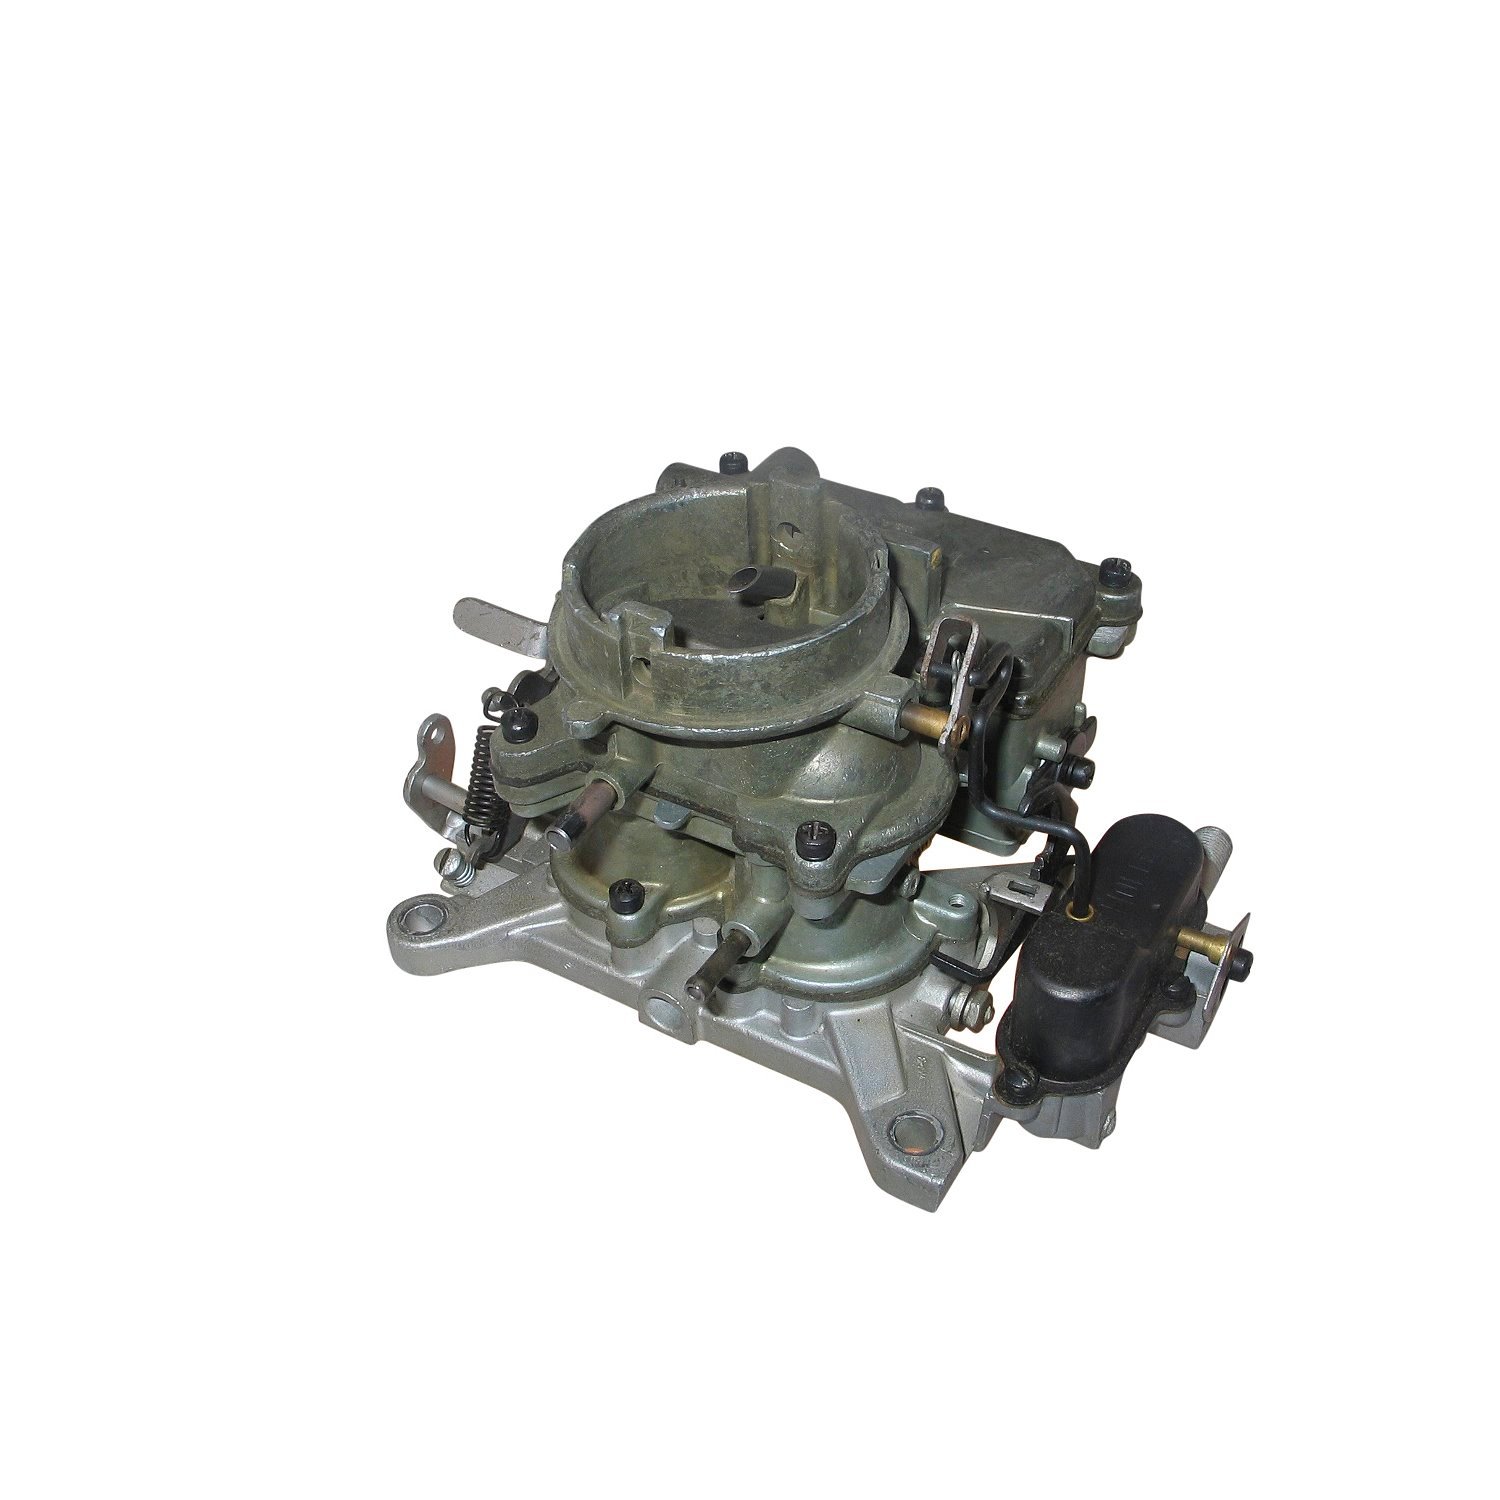 10-1031 Rochester Remanufactured Carburetor